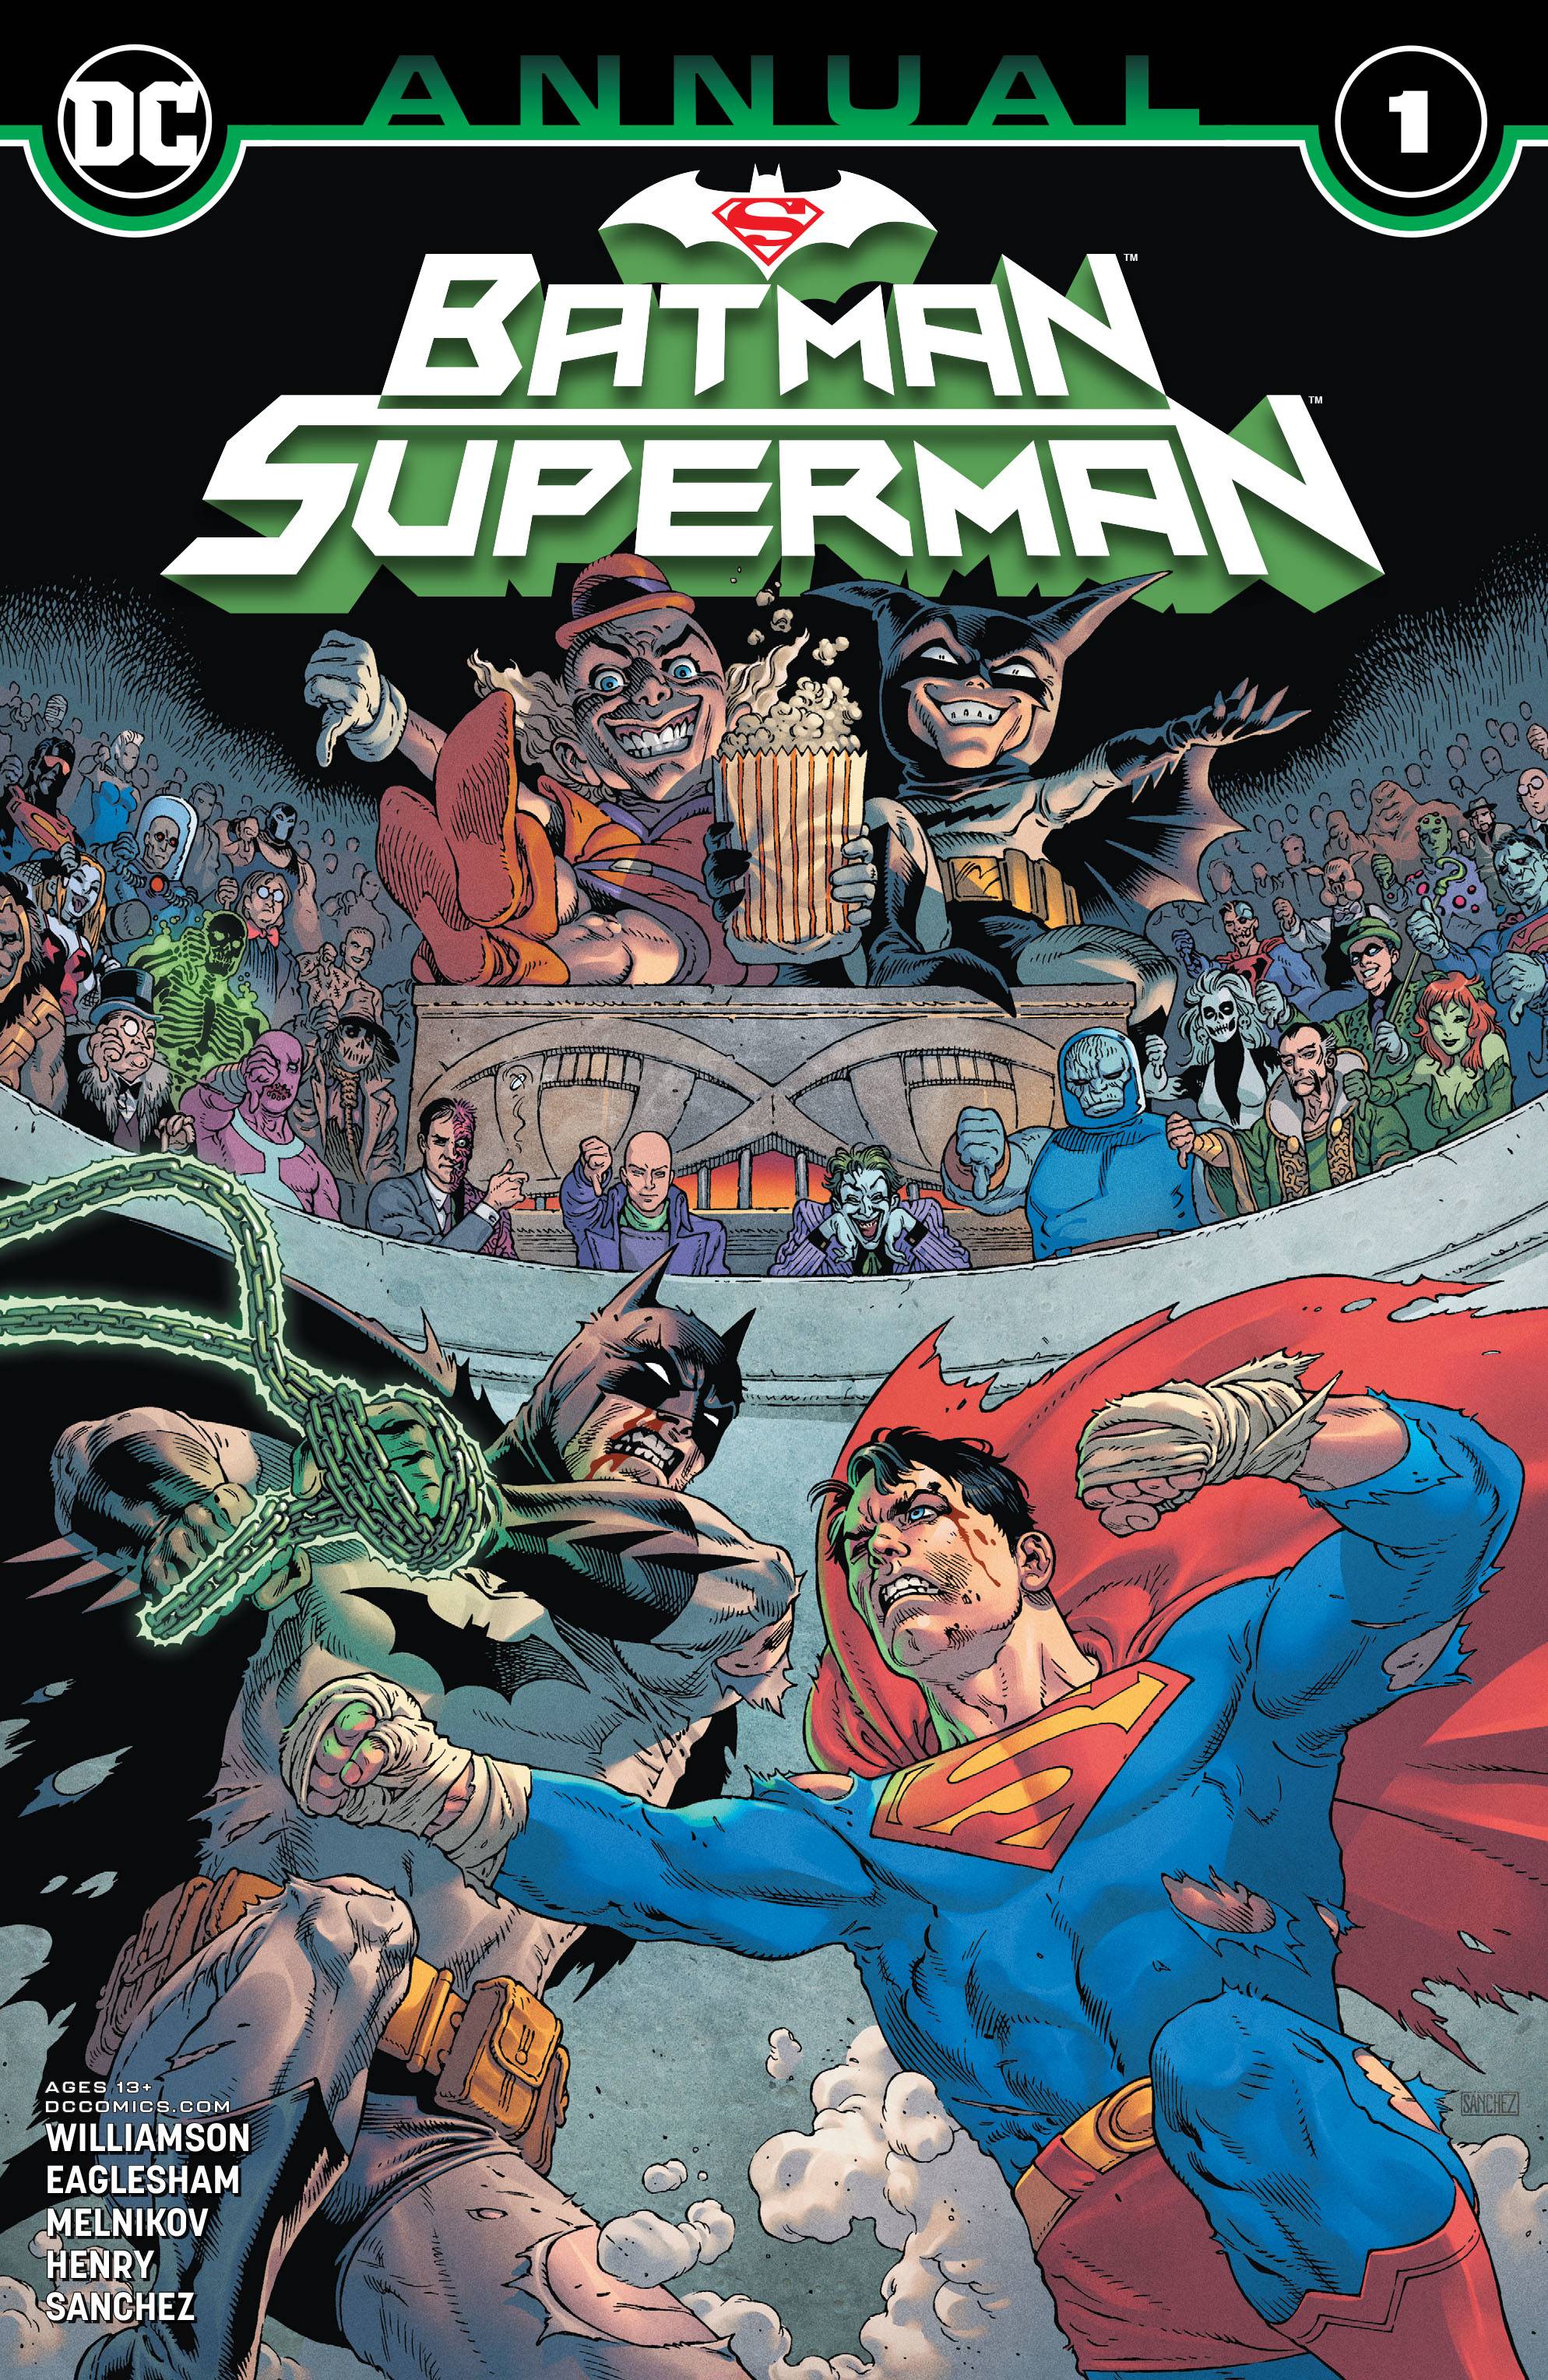 BATMAN SUPERMAN ANNUAL #1 | Game Master's Emporium (The New GME)